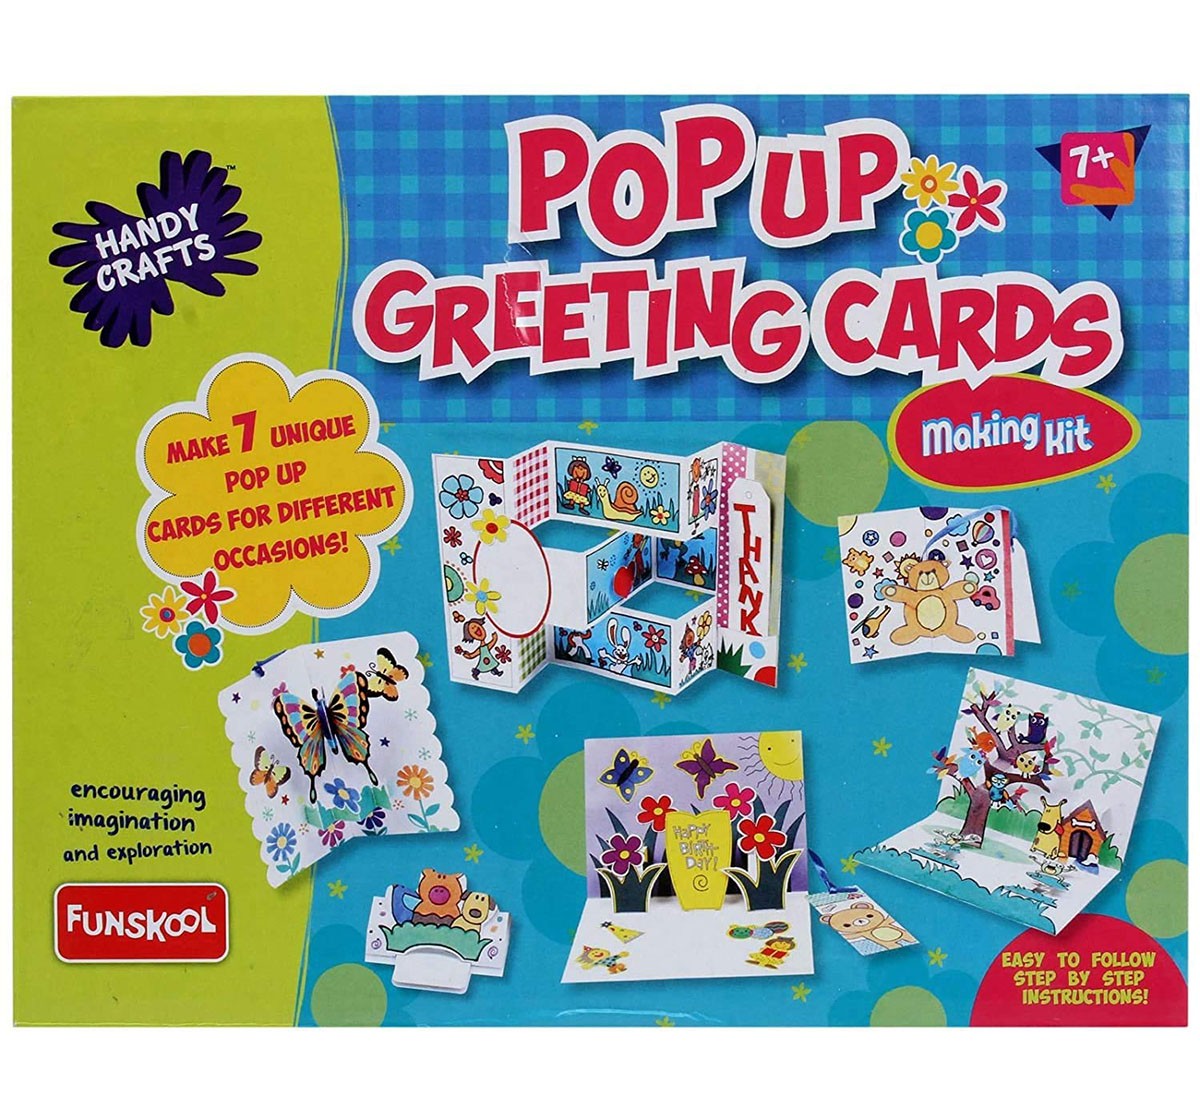 Handycraft Pop up greeting cards - 2014 (Multi color)